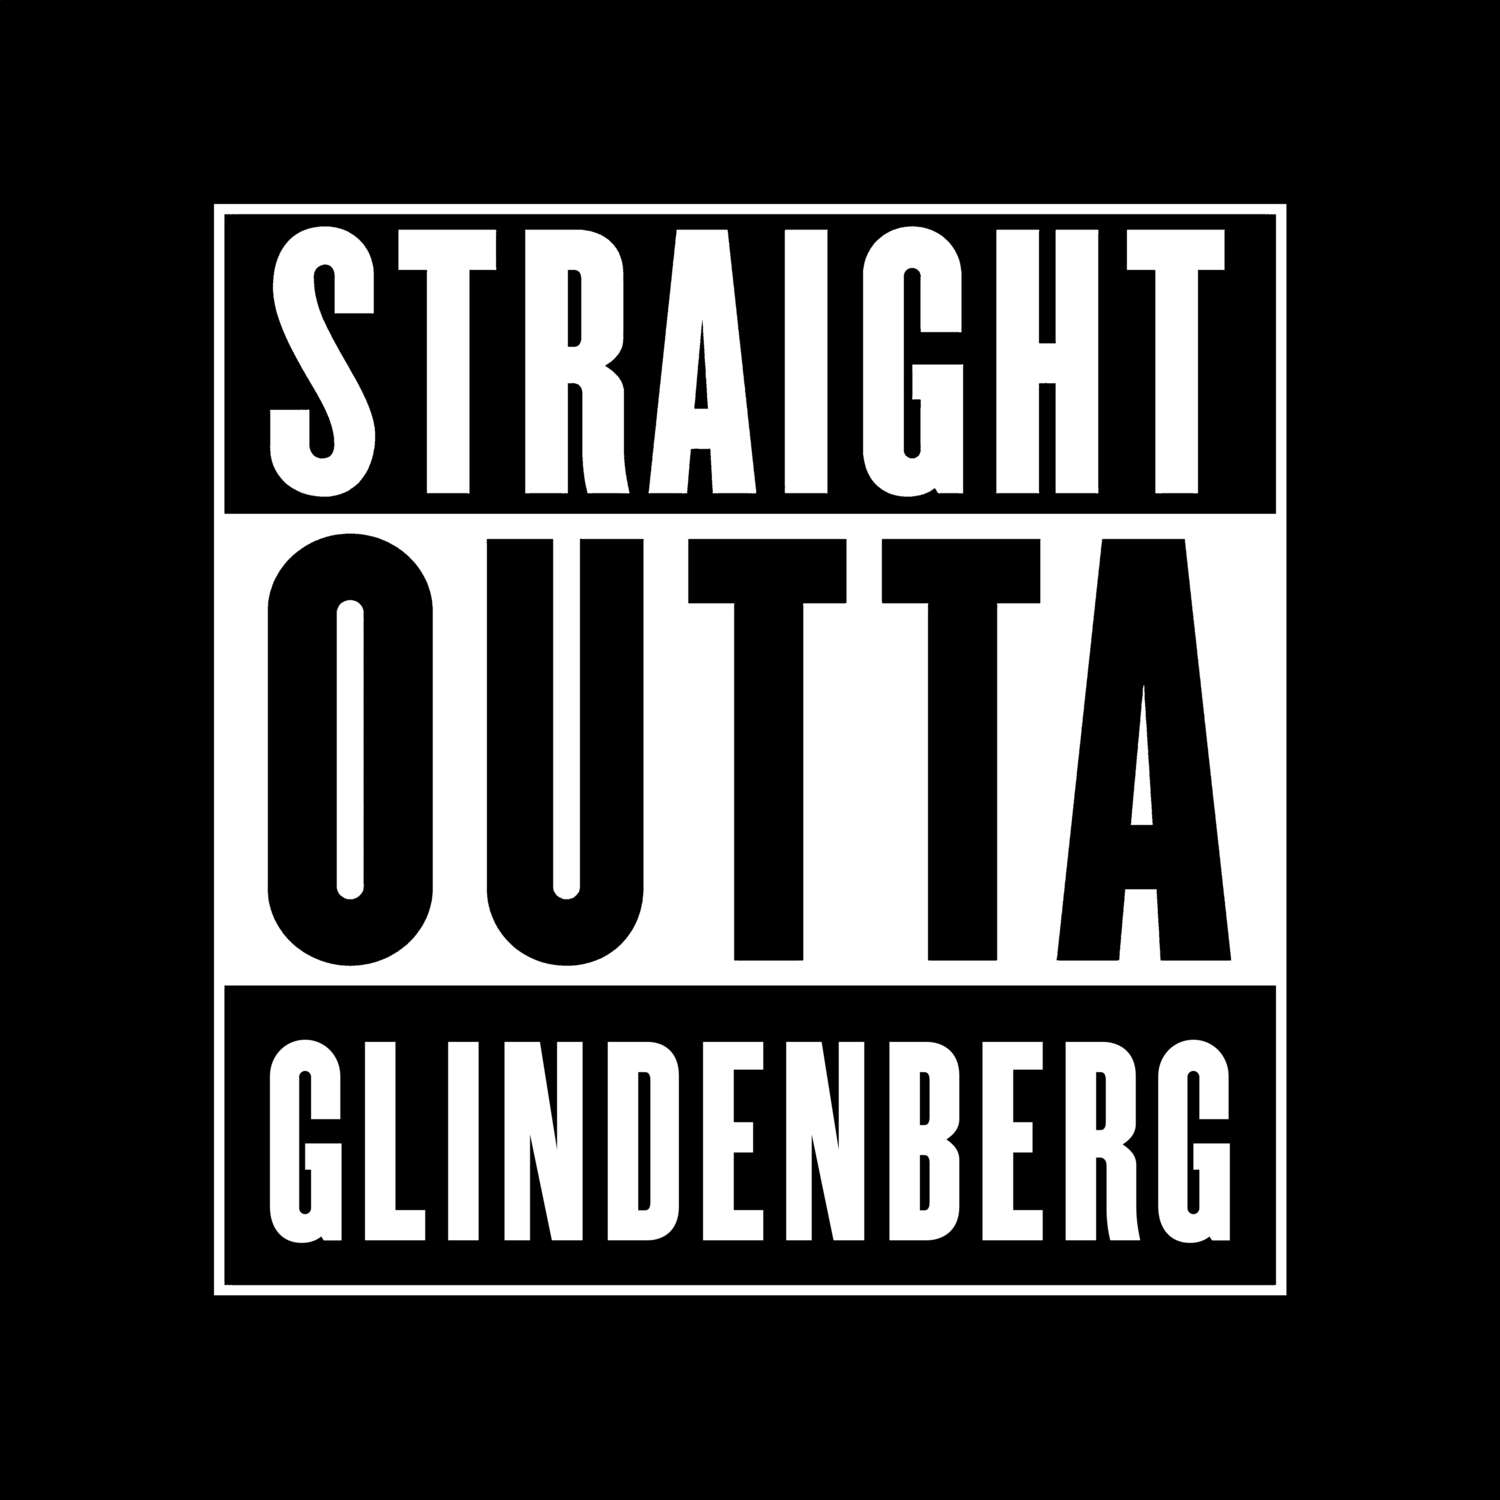 Glindenberg T-Shirt »Straight Outta«